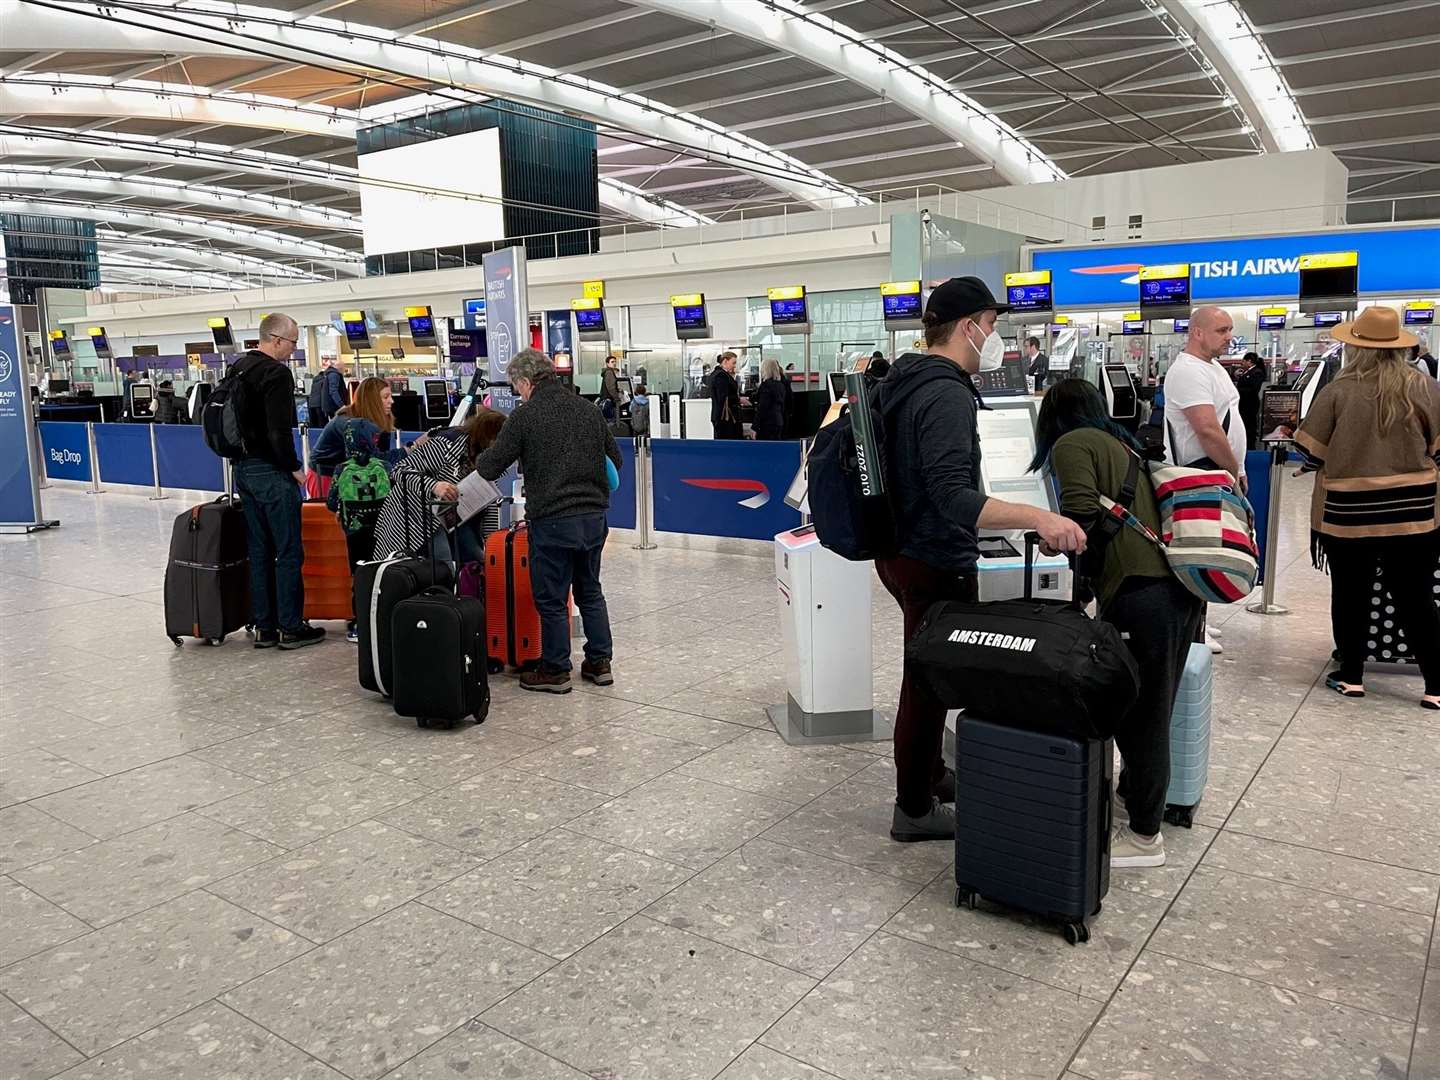 Passengers wait in line to check in at Terminal 5 of Heathrow Airport (Jordan Pettitt/PA)